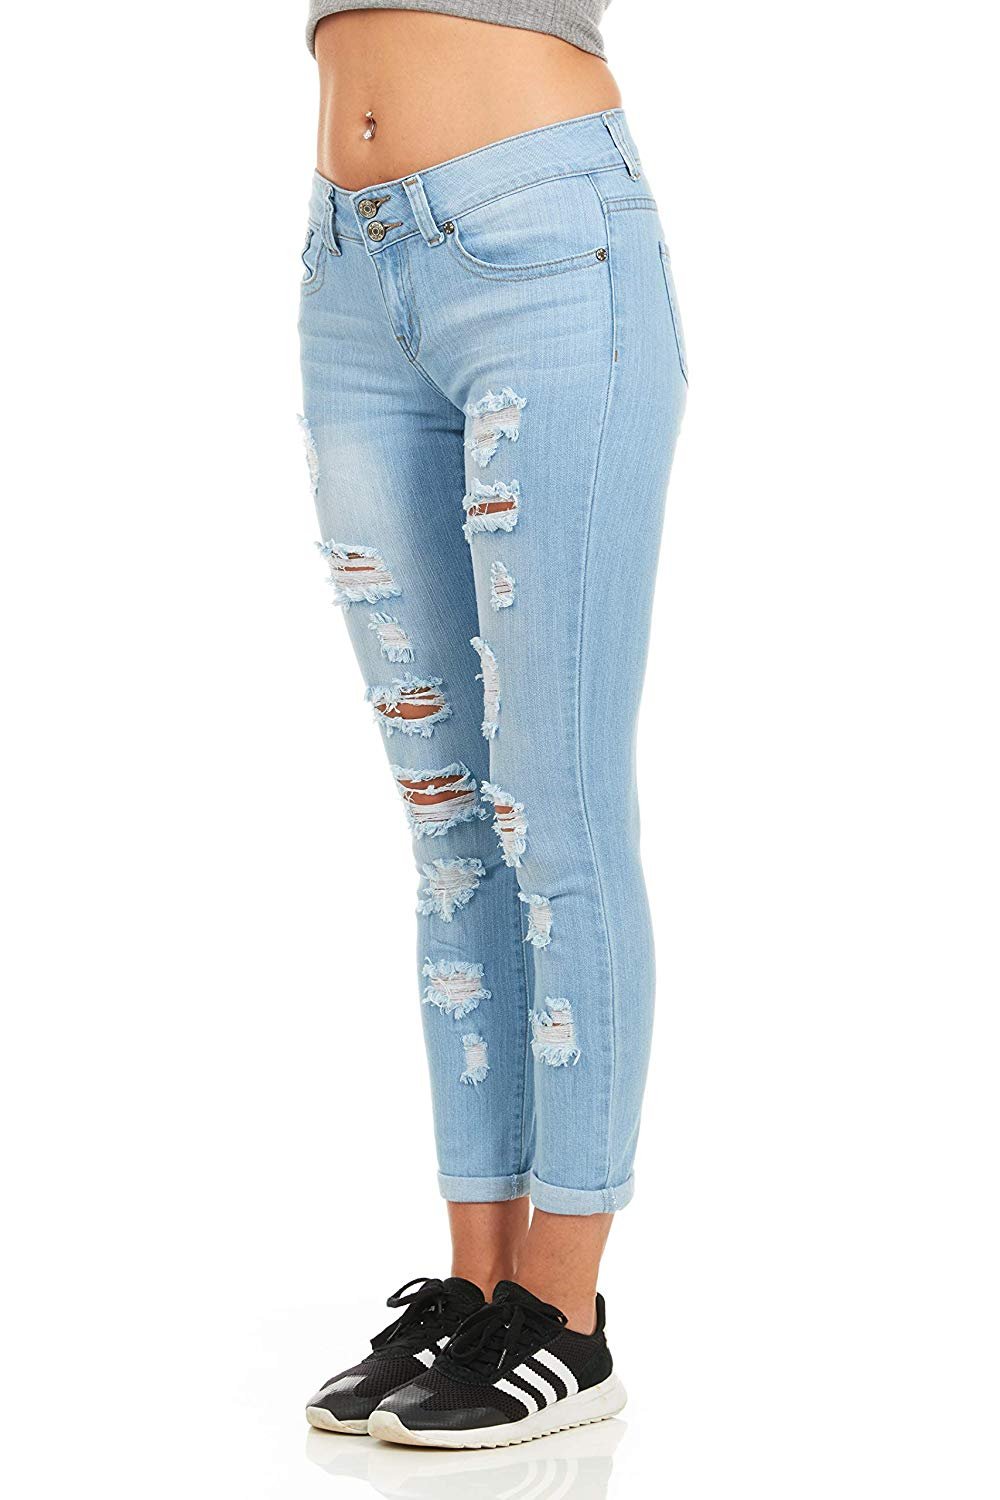 Cover Girl Denim Overall Jeans for Women Bib Strap Skinny Fit Junior Size 1 Varsity Blue Wash - image 1 of 10